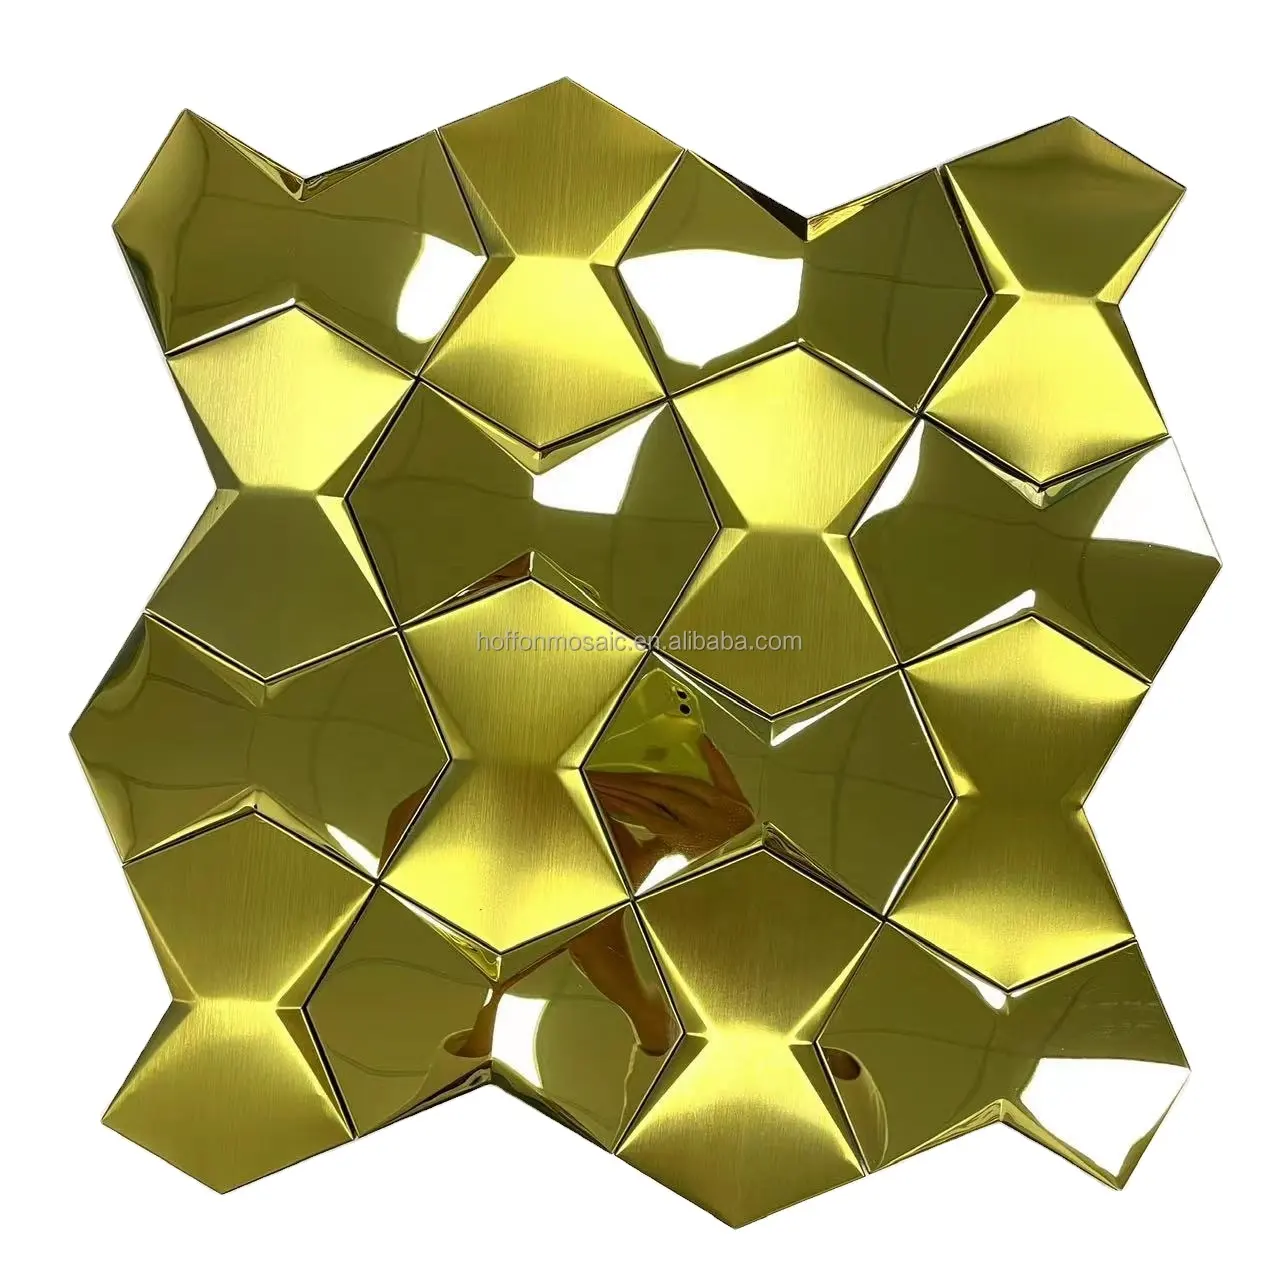 3D fertig polierte oberfläche sechseckige form goldene farbe edelstahl mosaik für wanddekoration